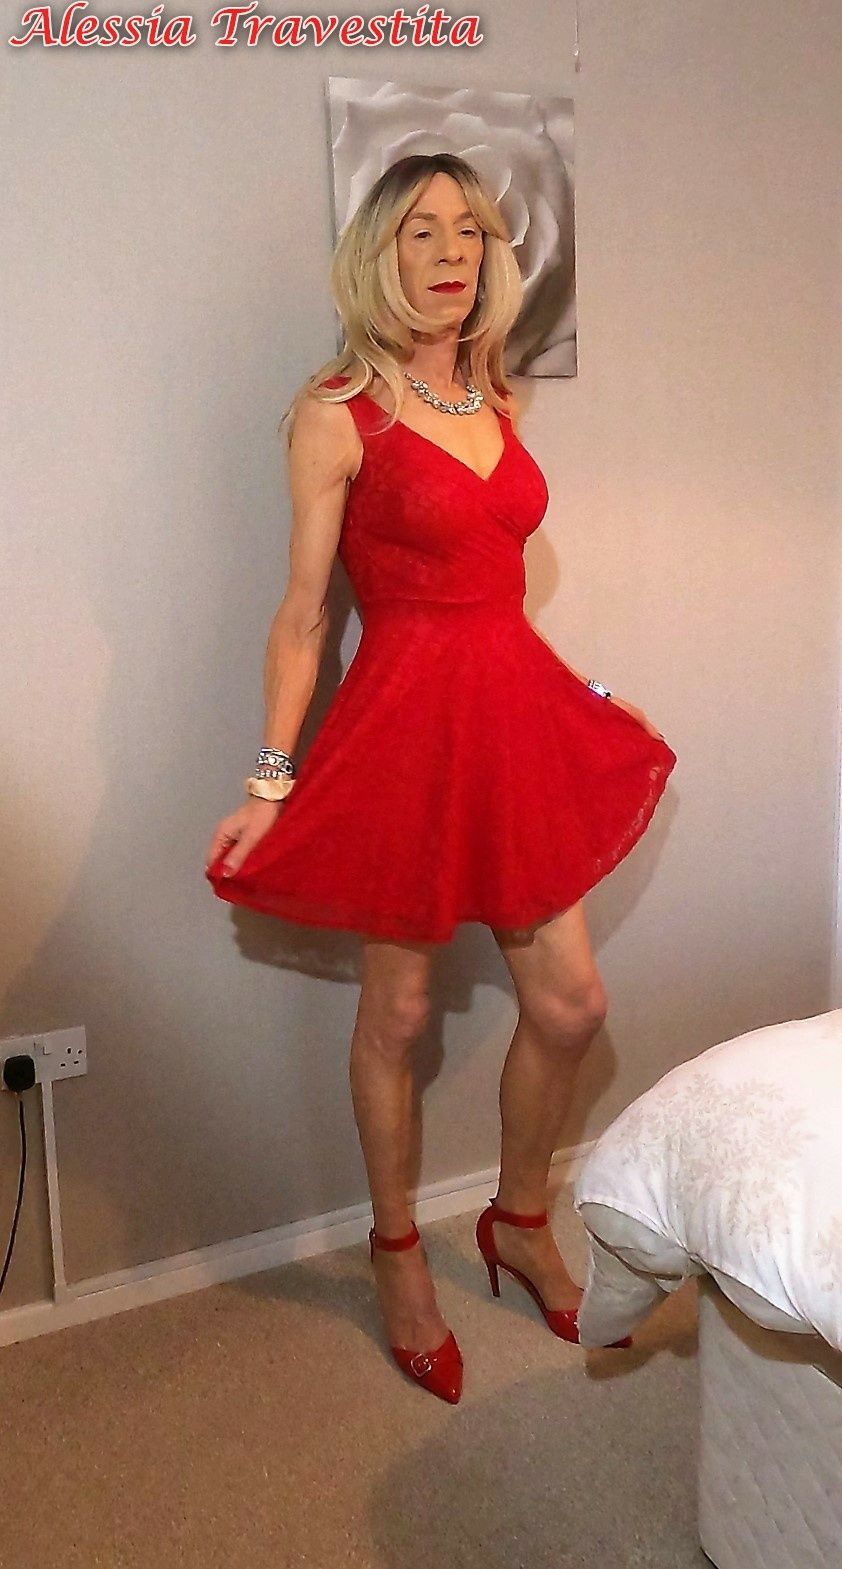 65 Alessia Travestita in Flirty Red Dress #24